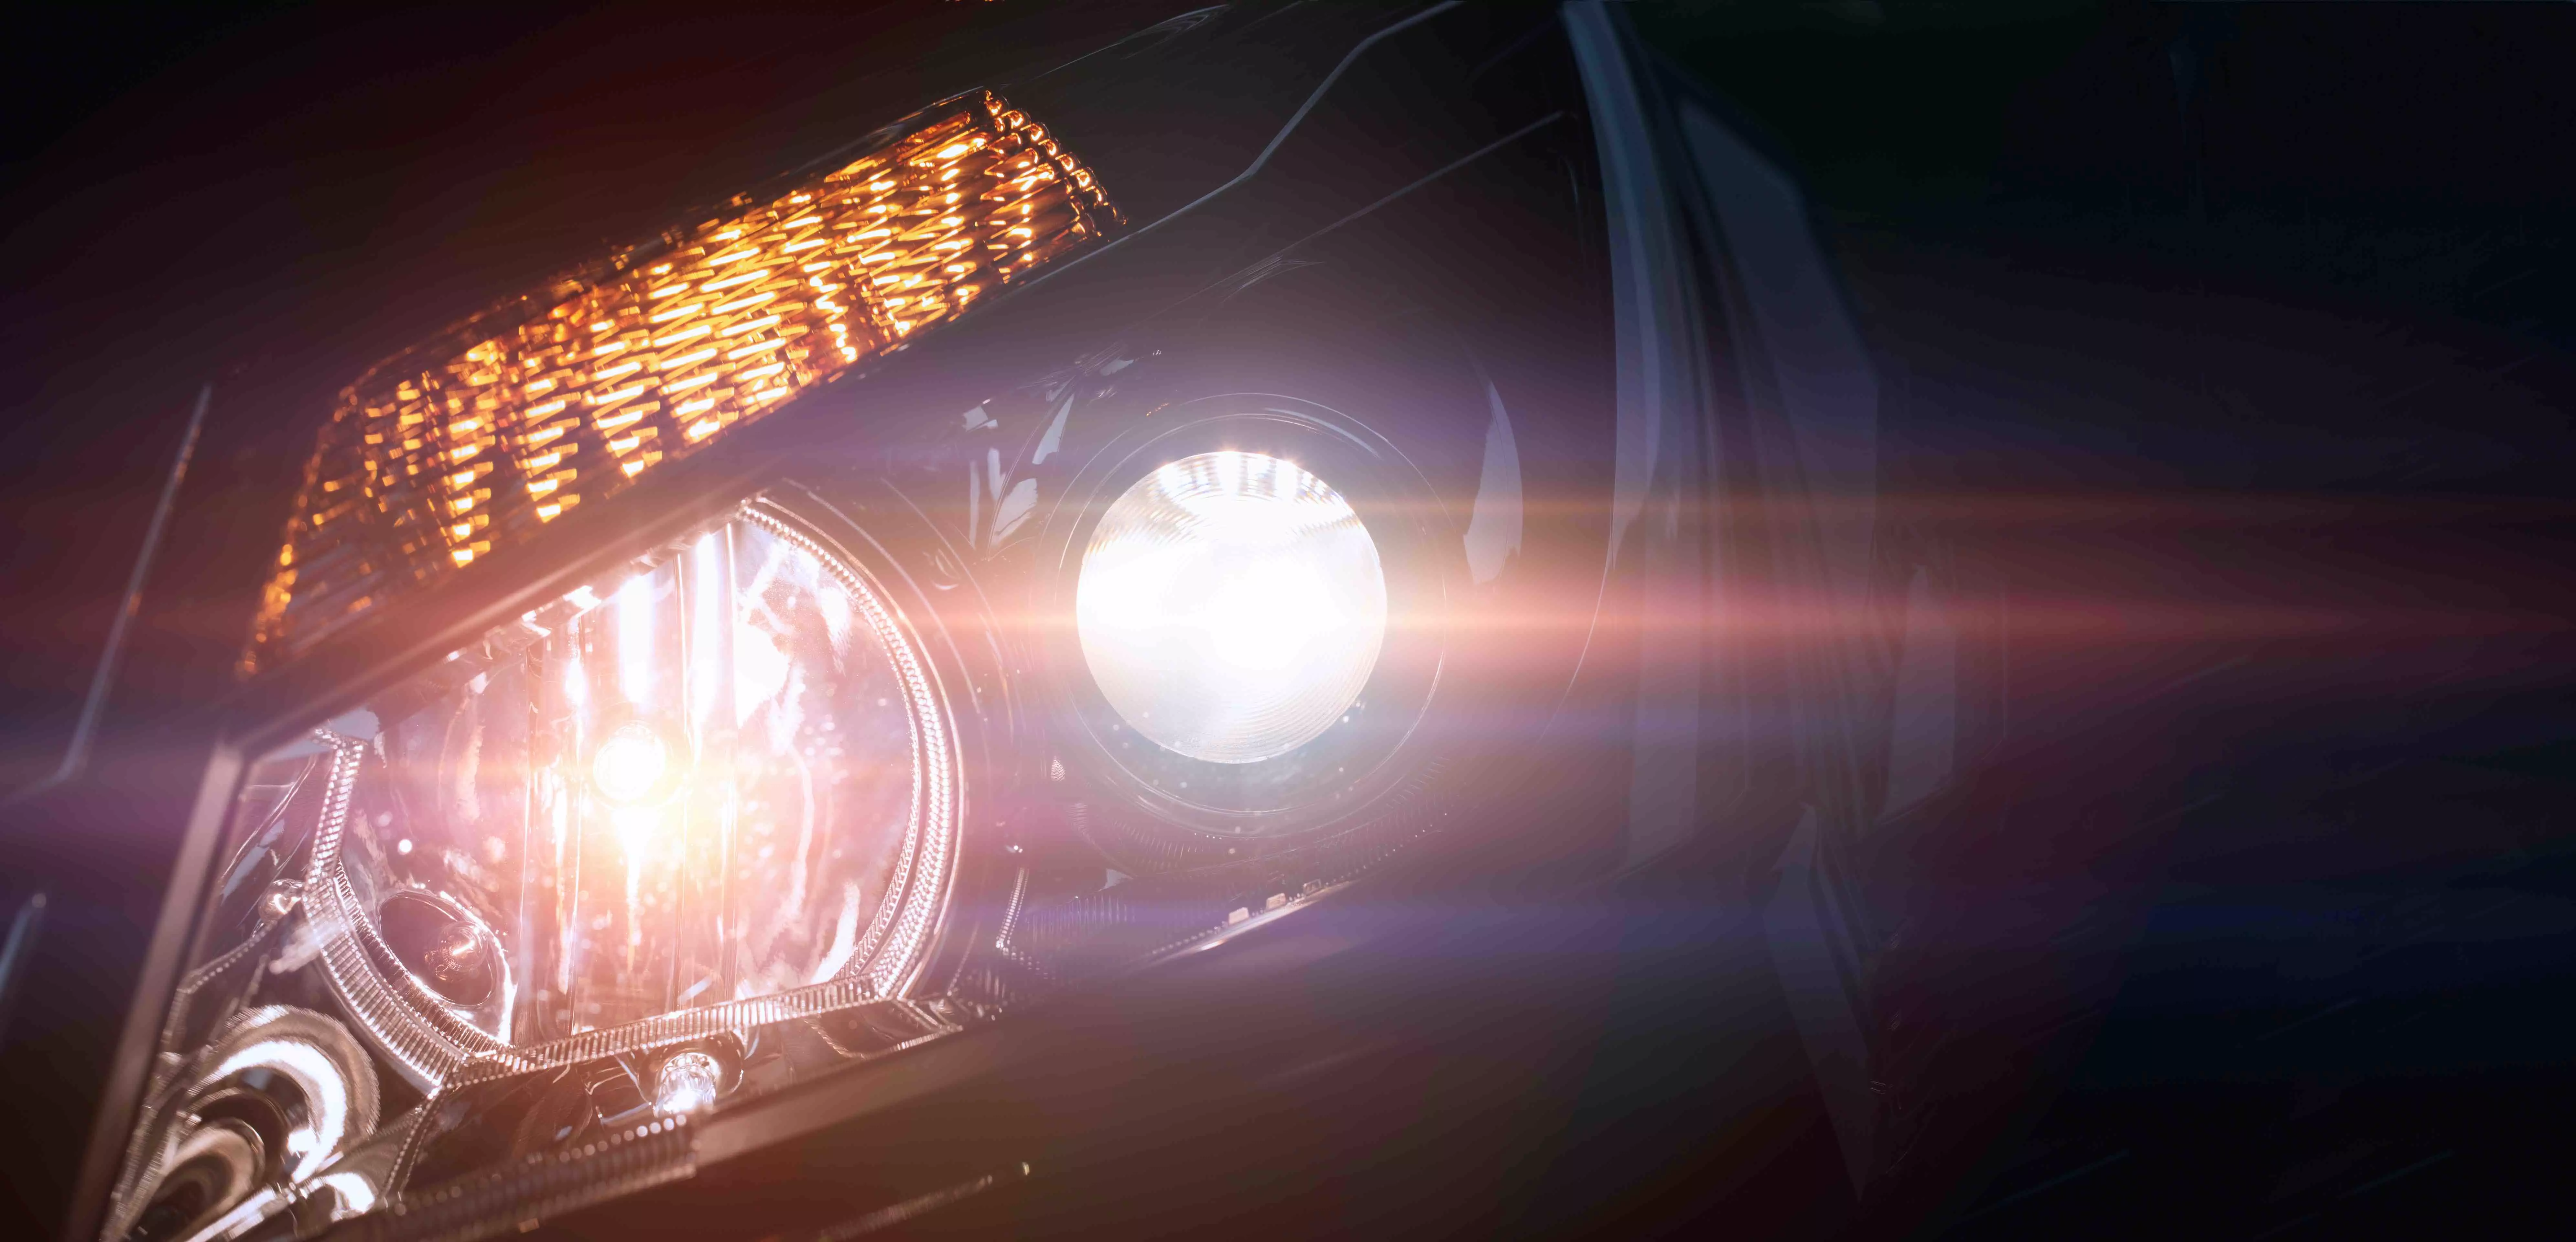 How To Make Your Car Headlights Shine Like New